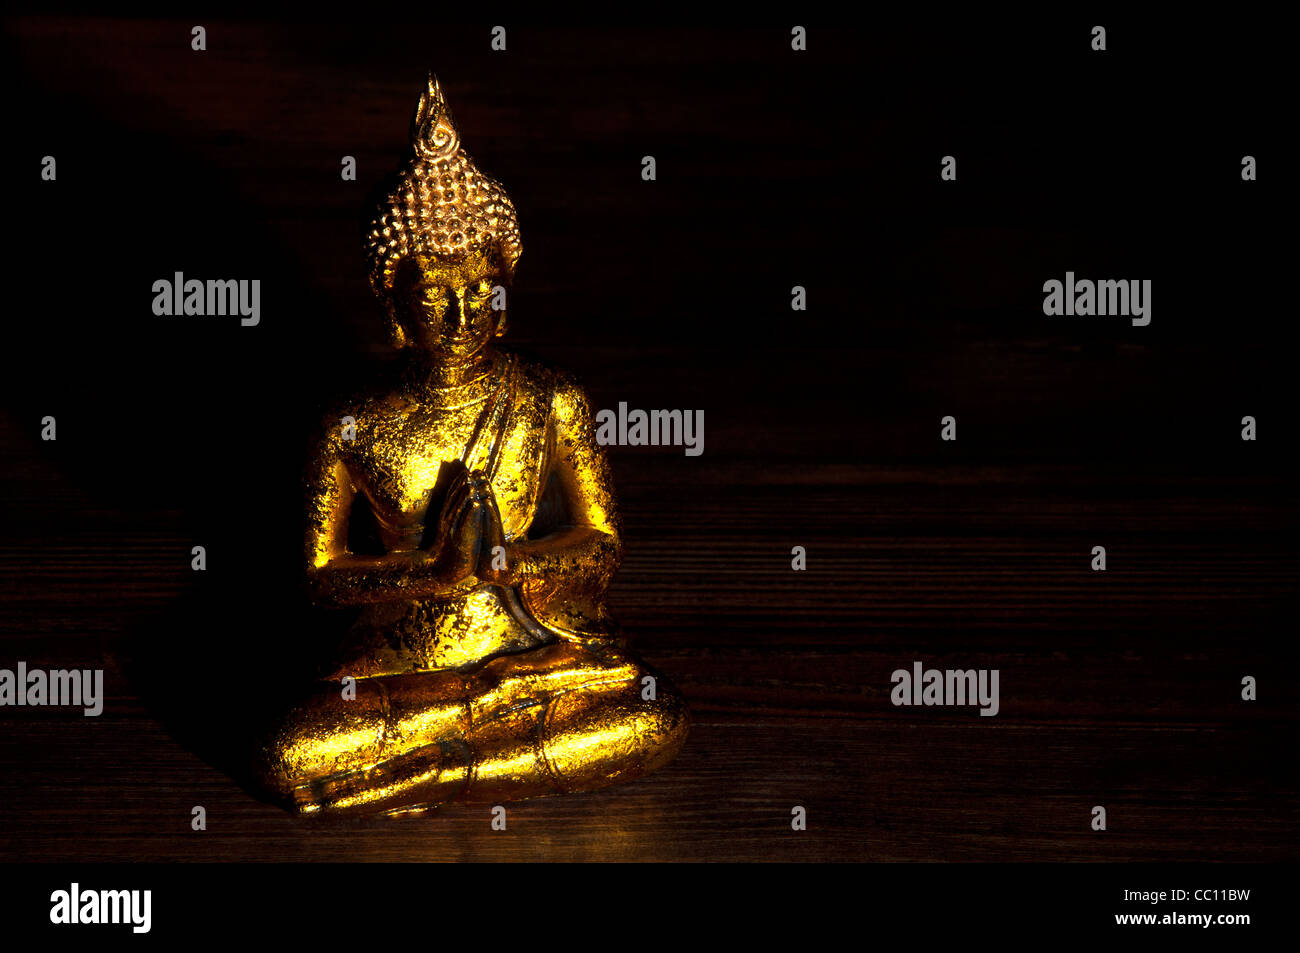 Golden buddha statue, gold buddha, meditating concept, calm